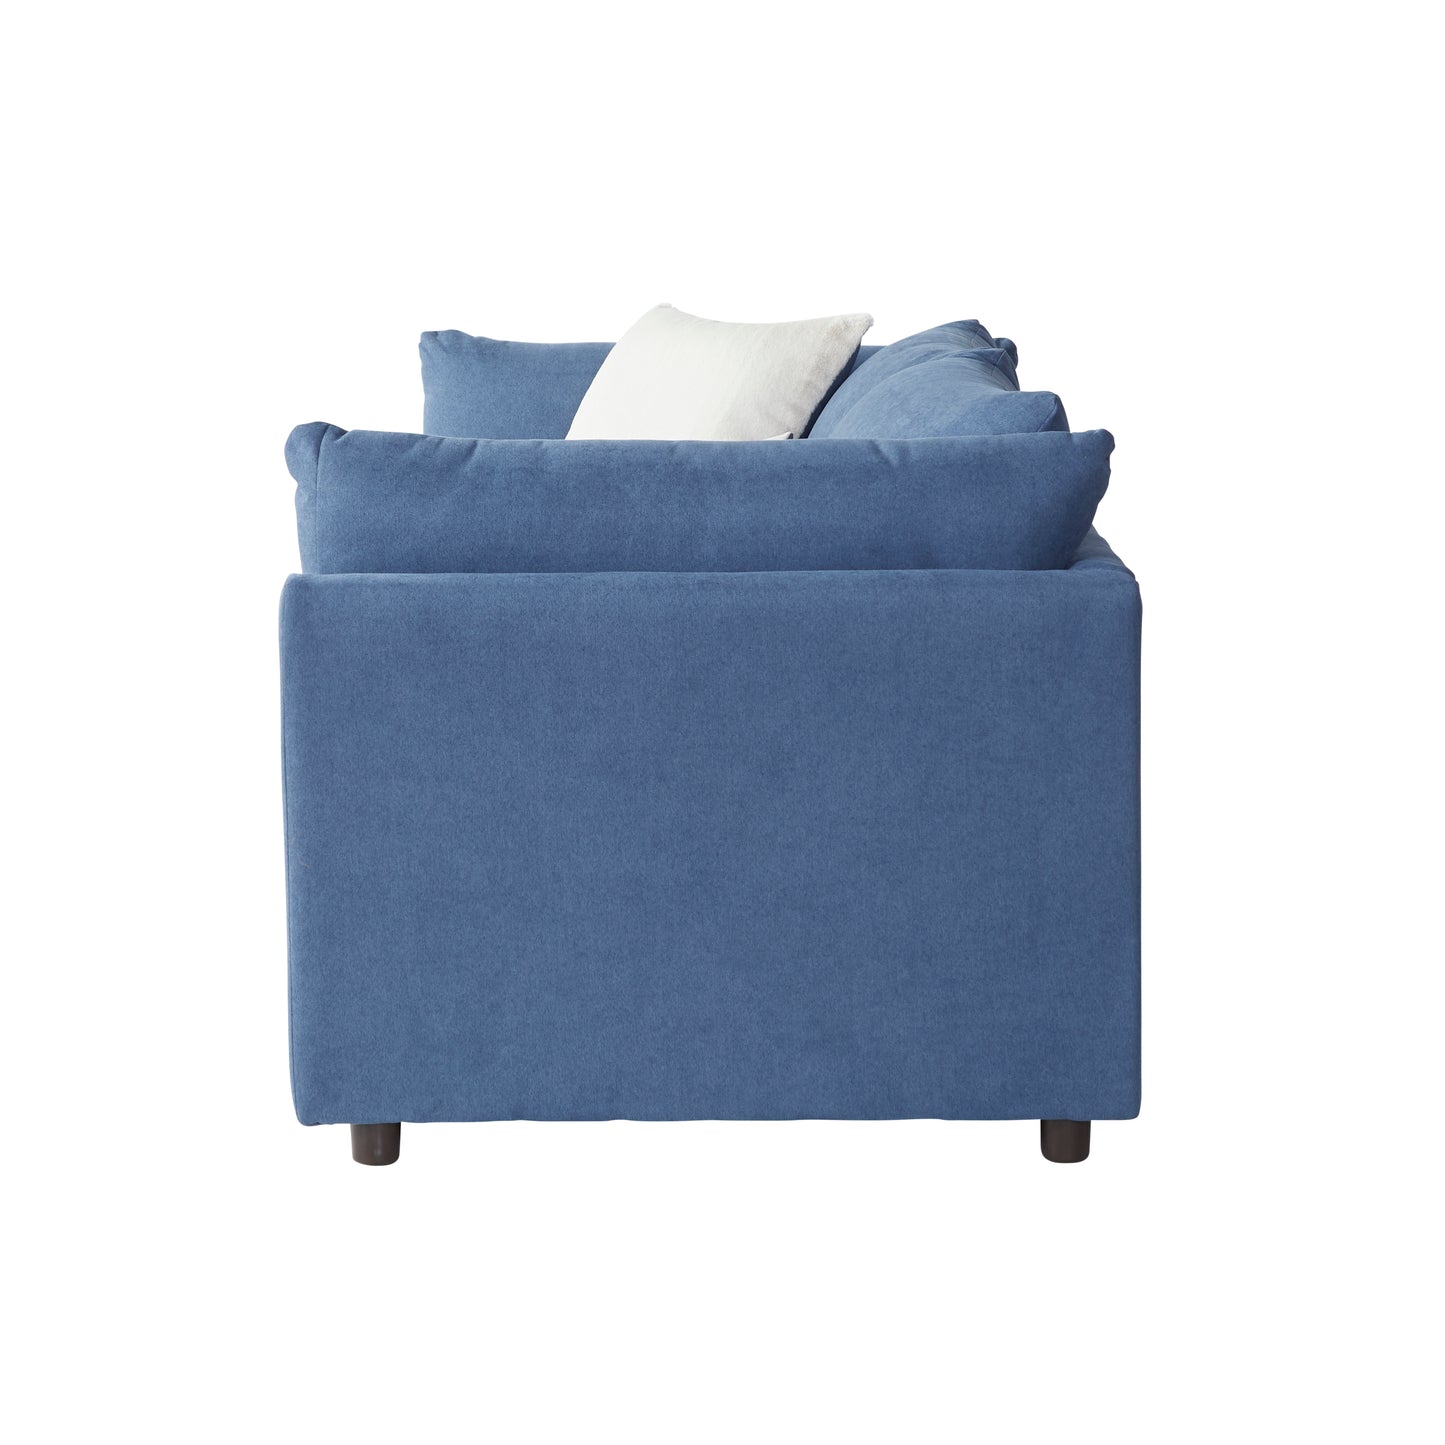 Roundhill Furniture Enda Pillow Back Fabric Sofa, Image Navy